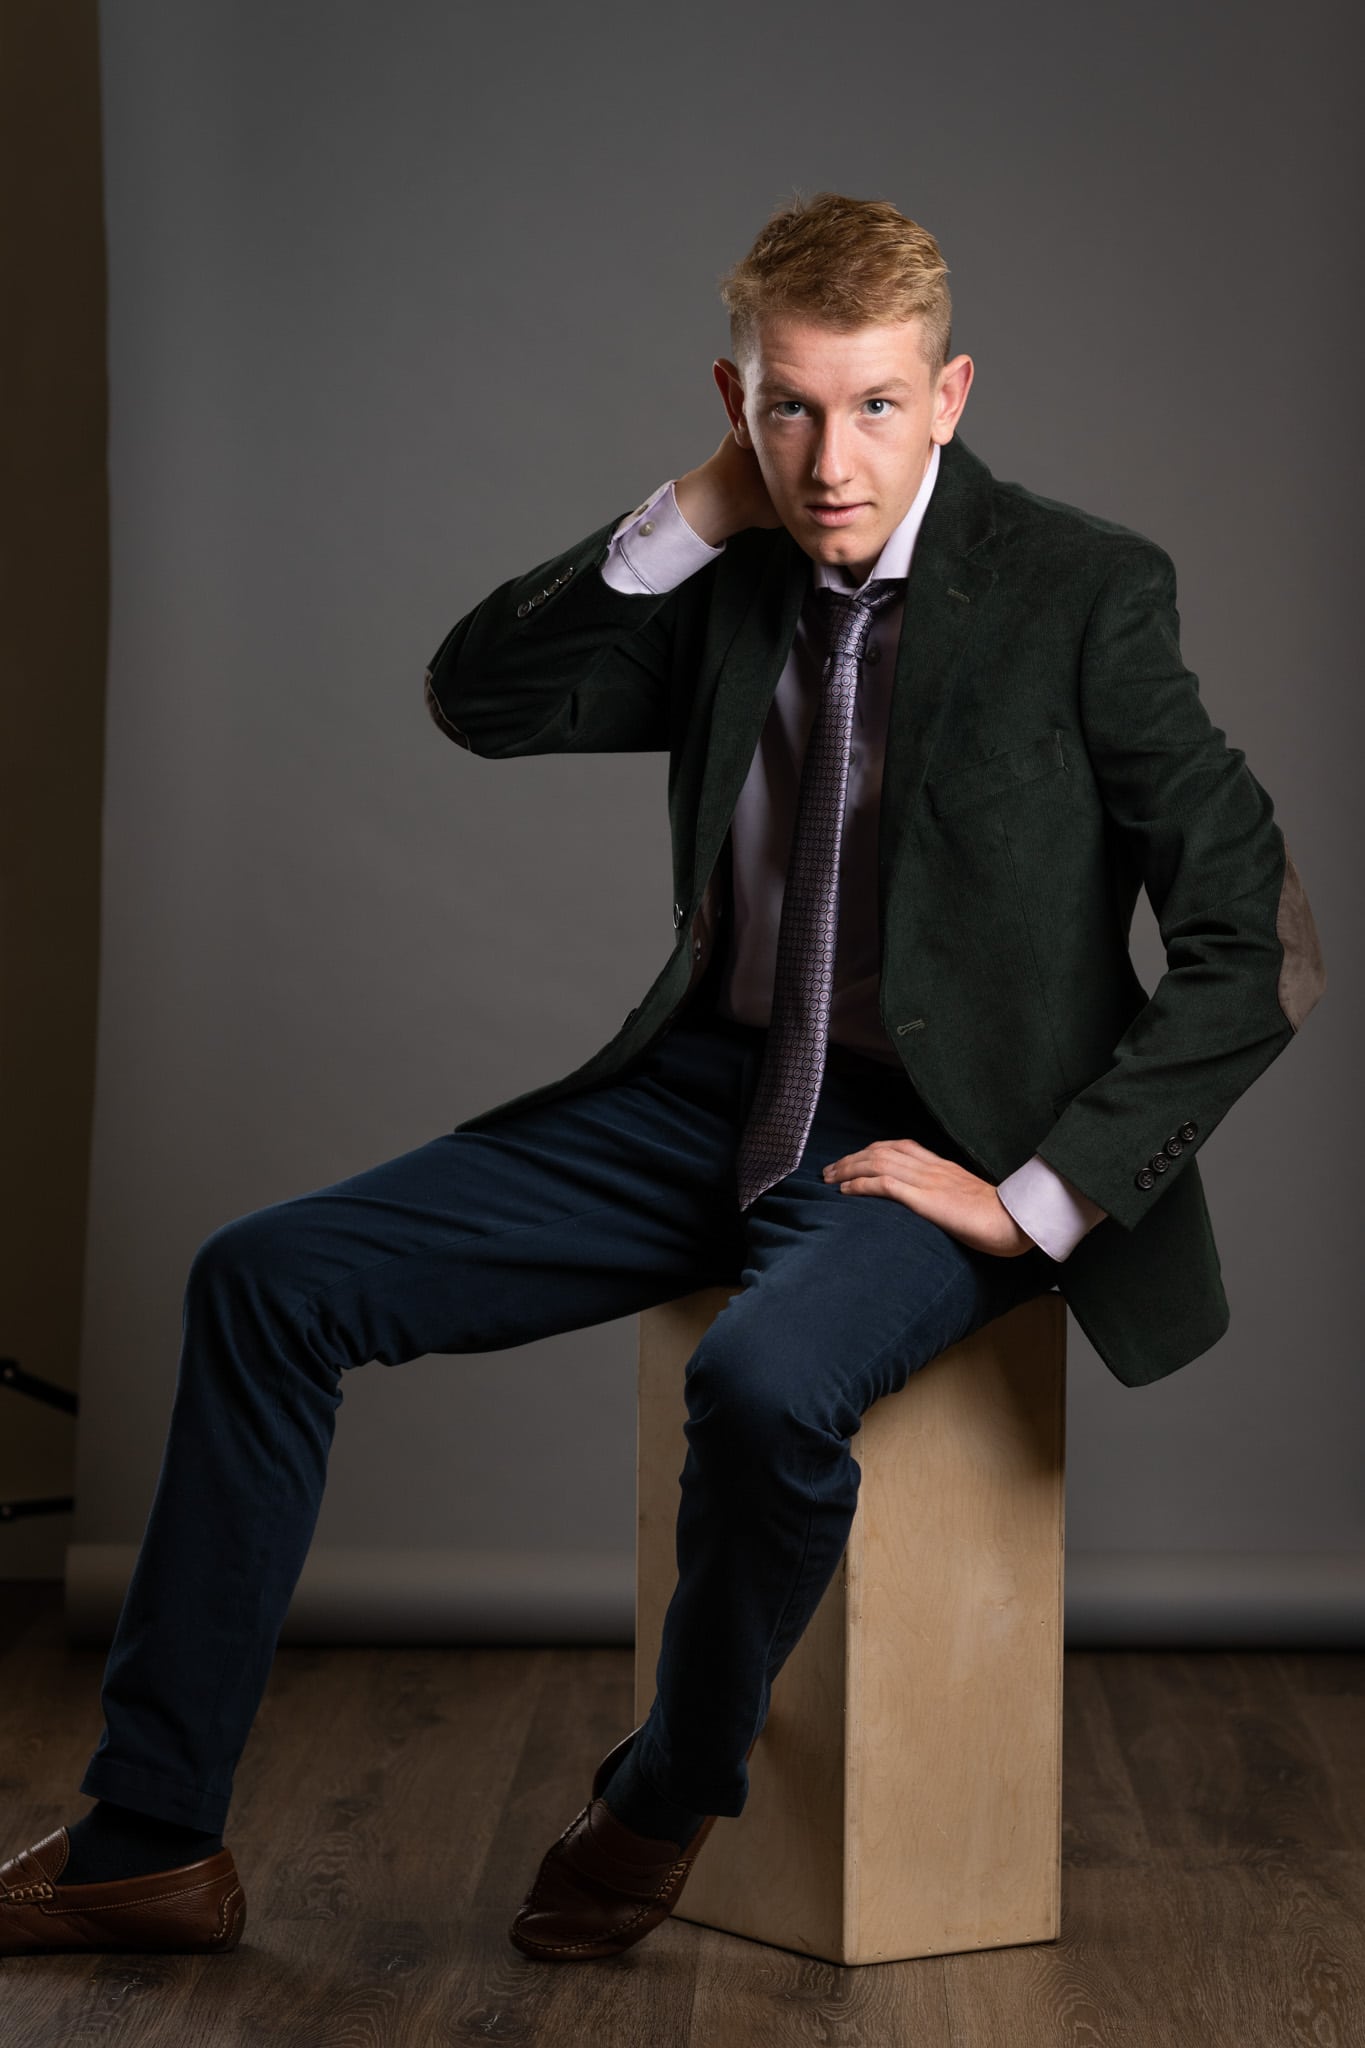 a high school senior guy sitting on a block stool wearing a tie, blazer, slacks, and posing